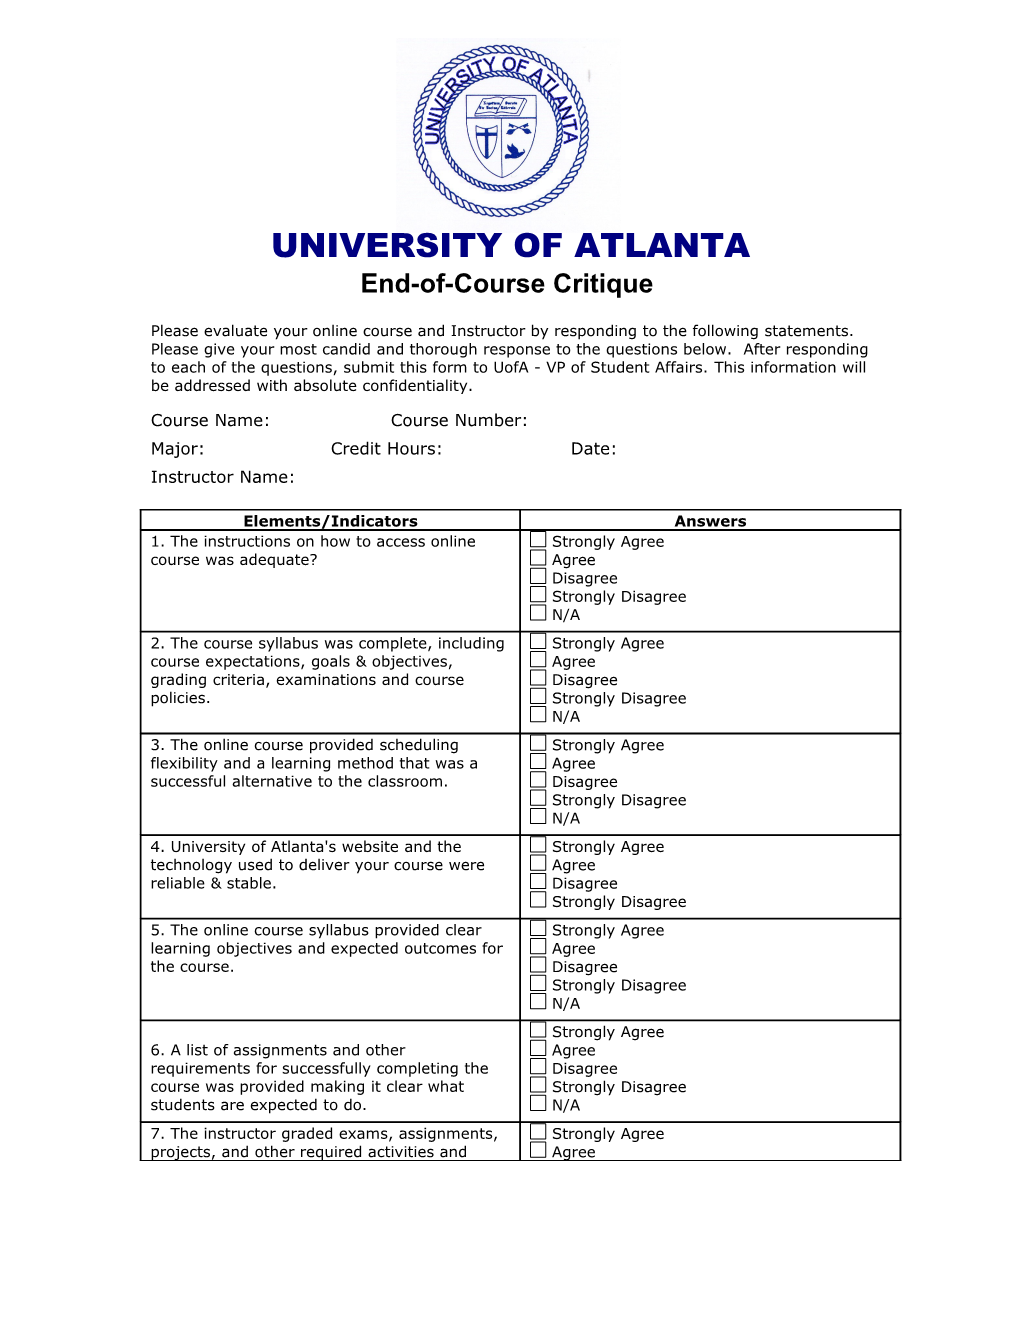 University of Atlanta